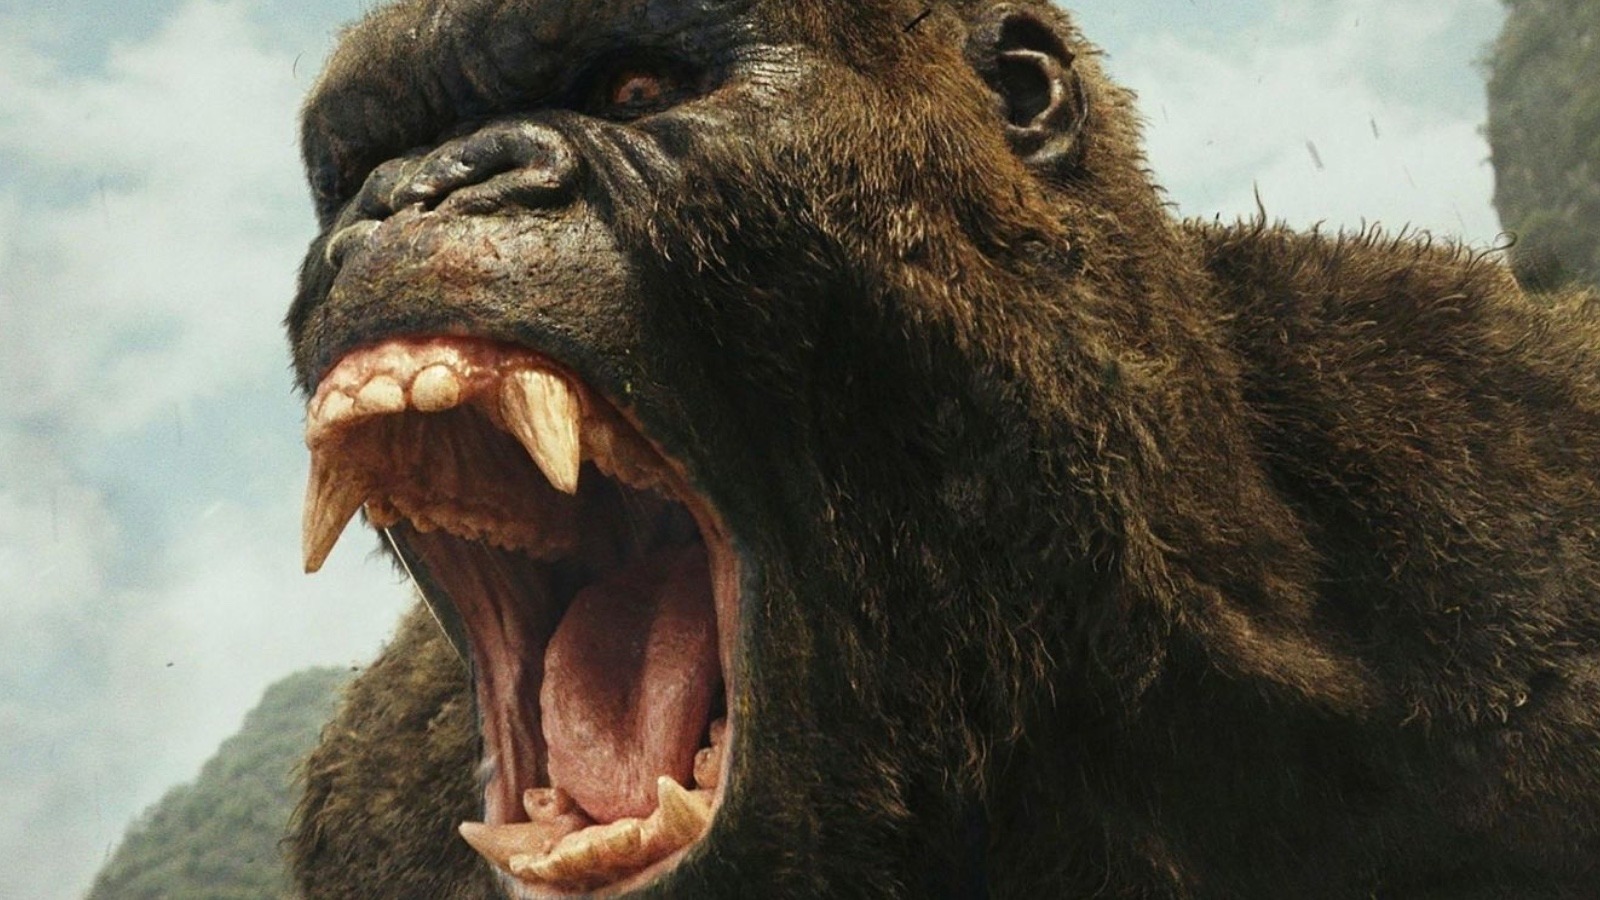 Image of angry, roaring, Kong